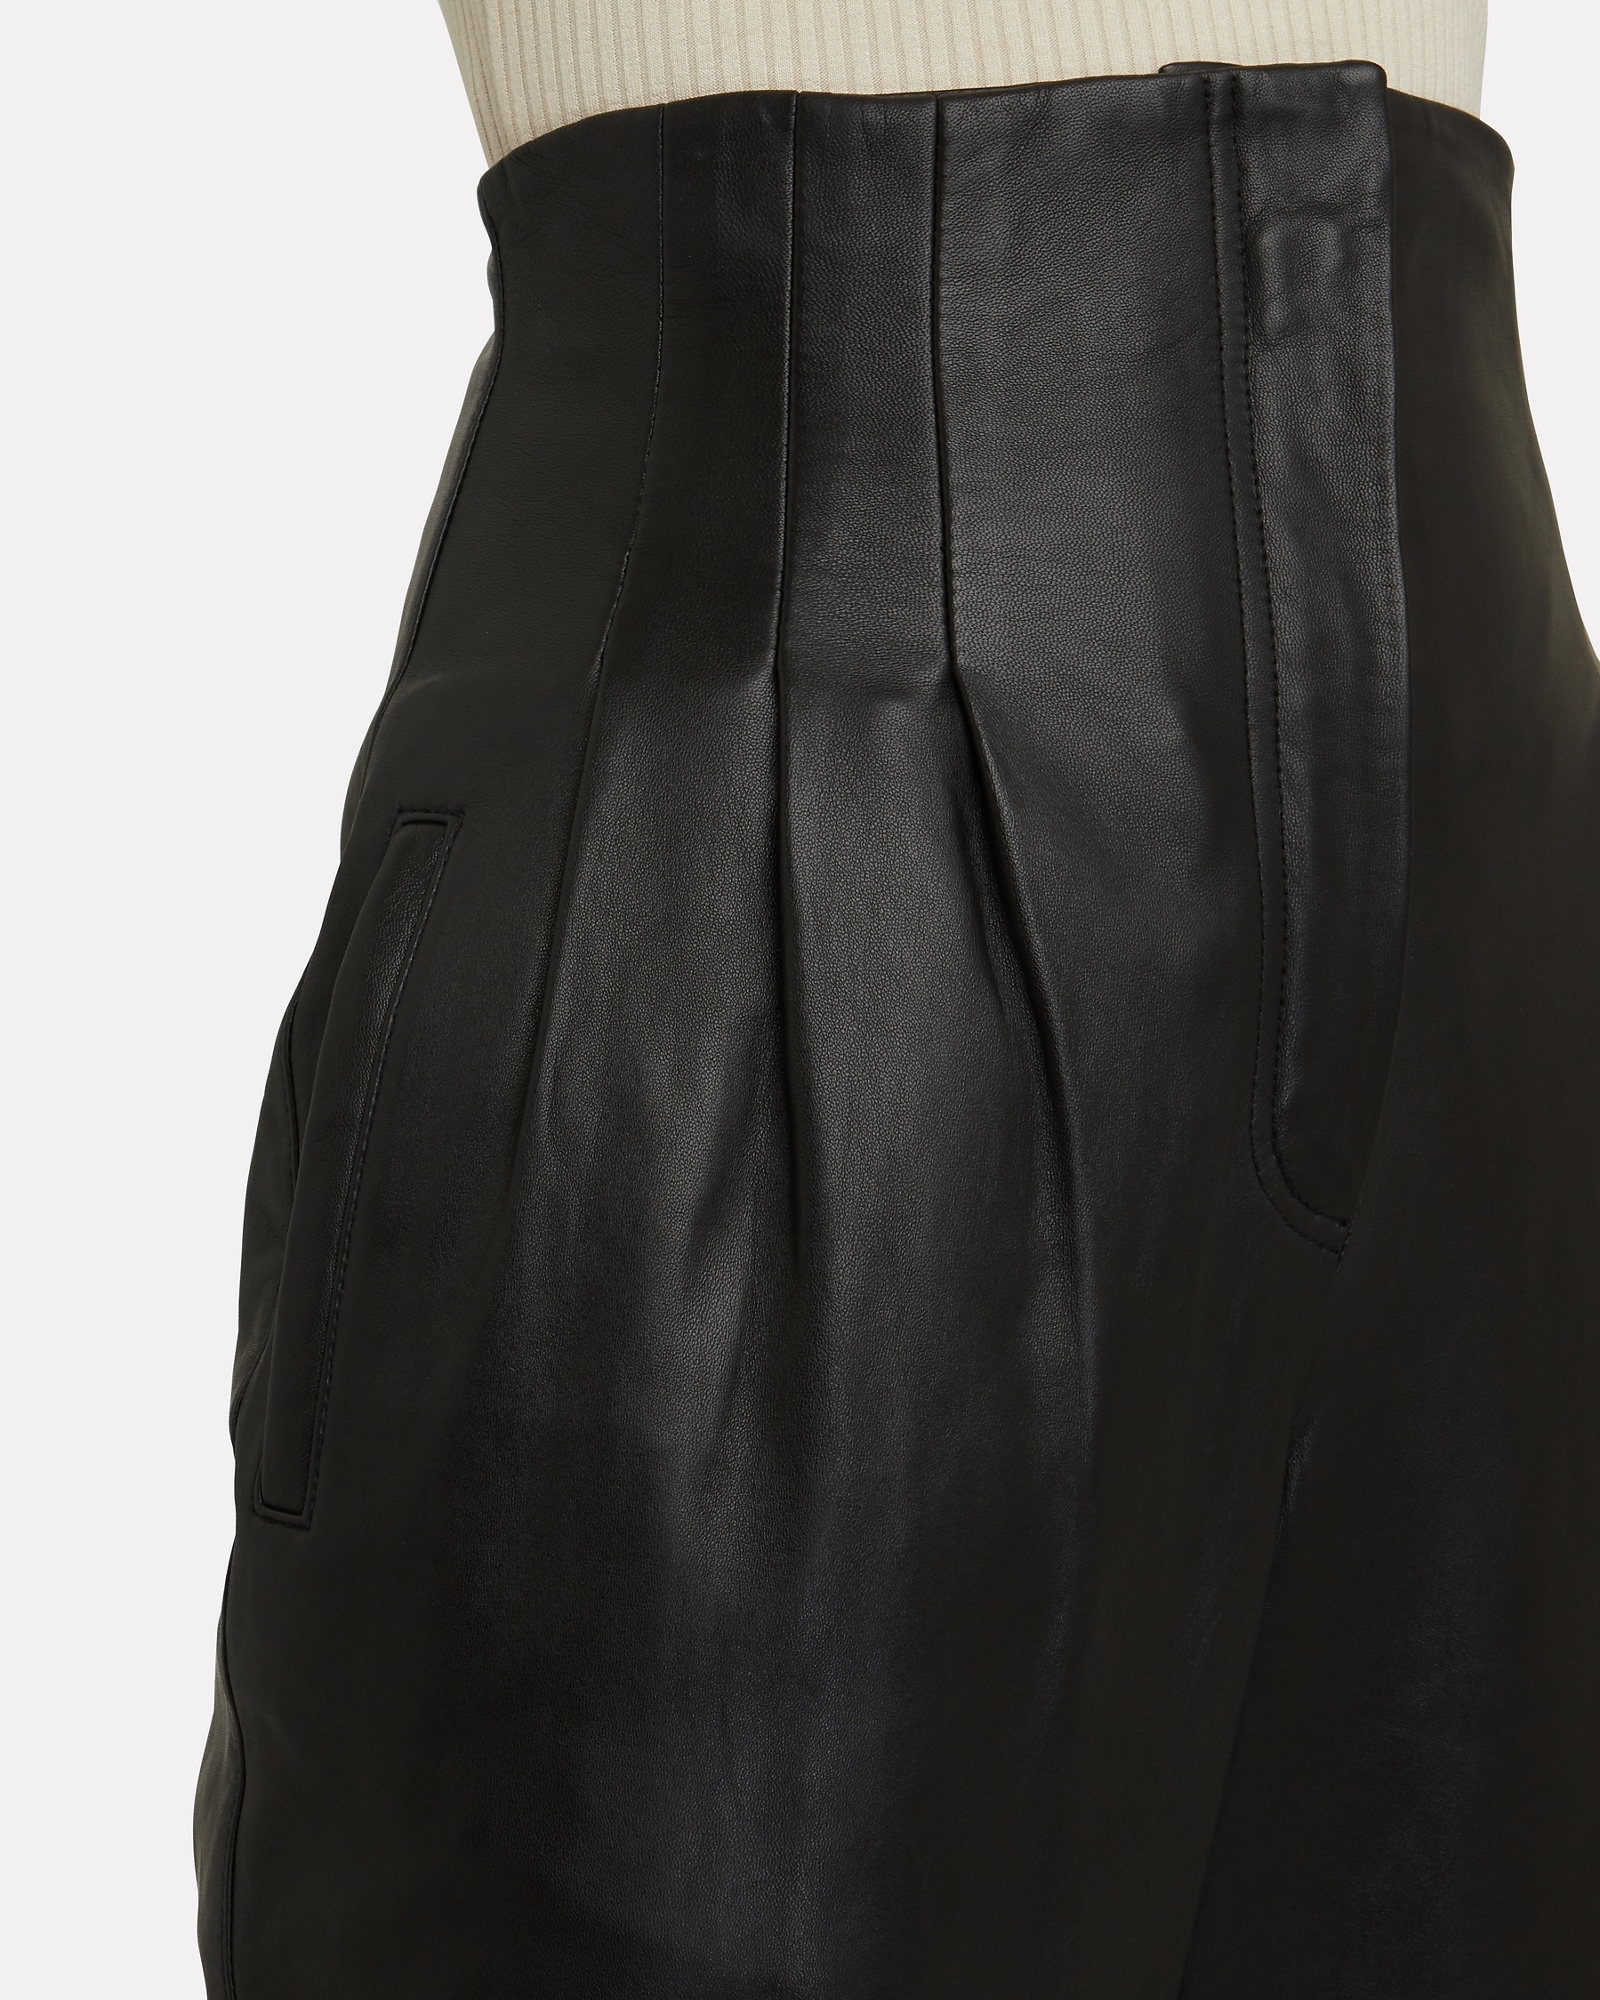 Alberta Ferretti Tapered High-Waist Leather Pants | INTERMIX®